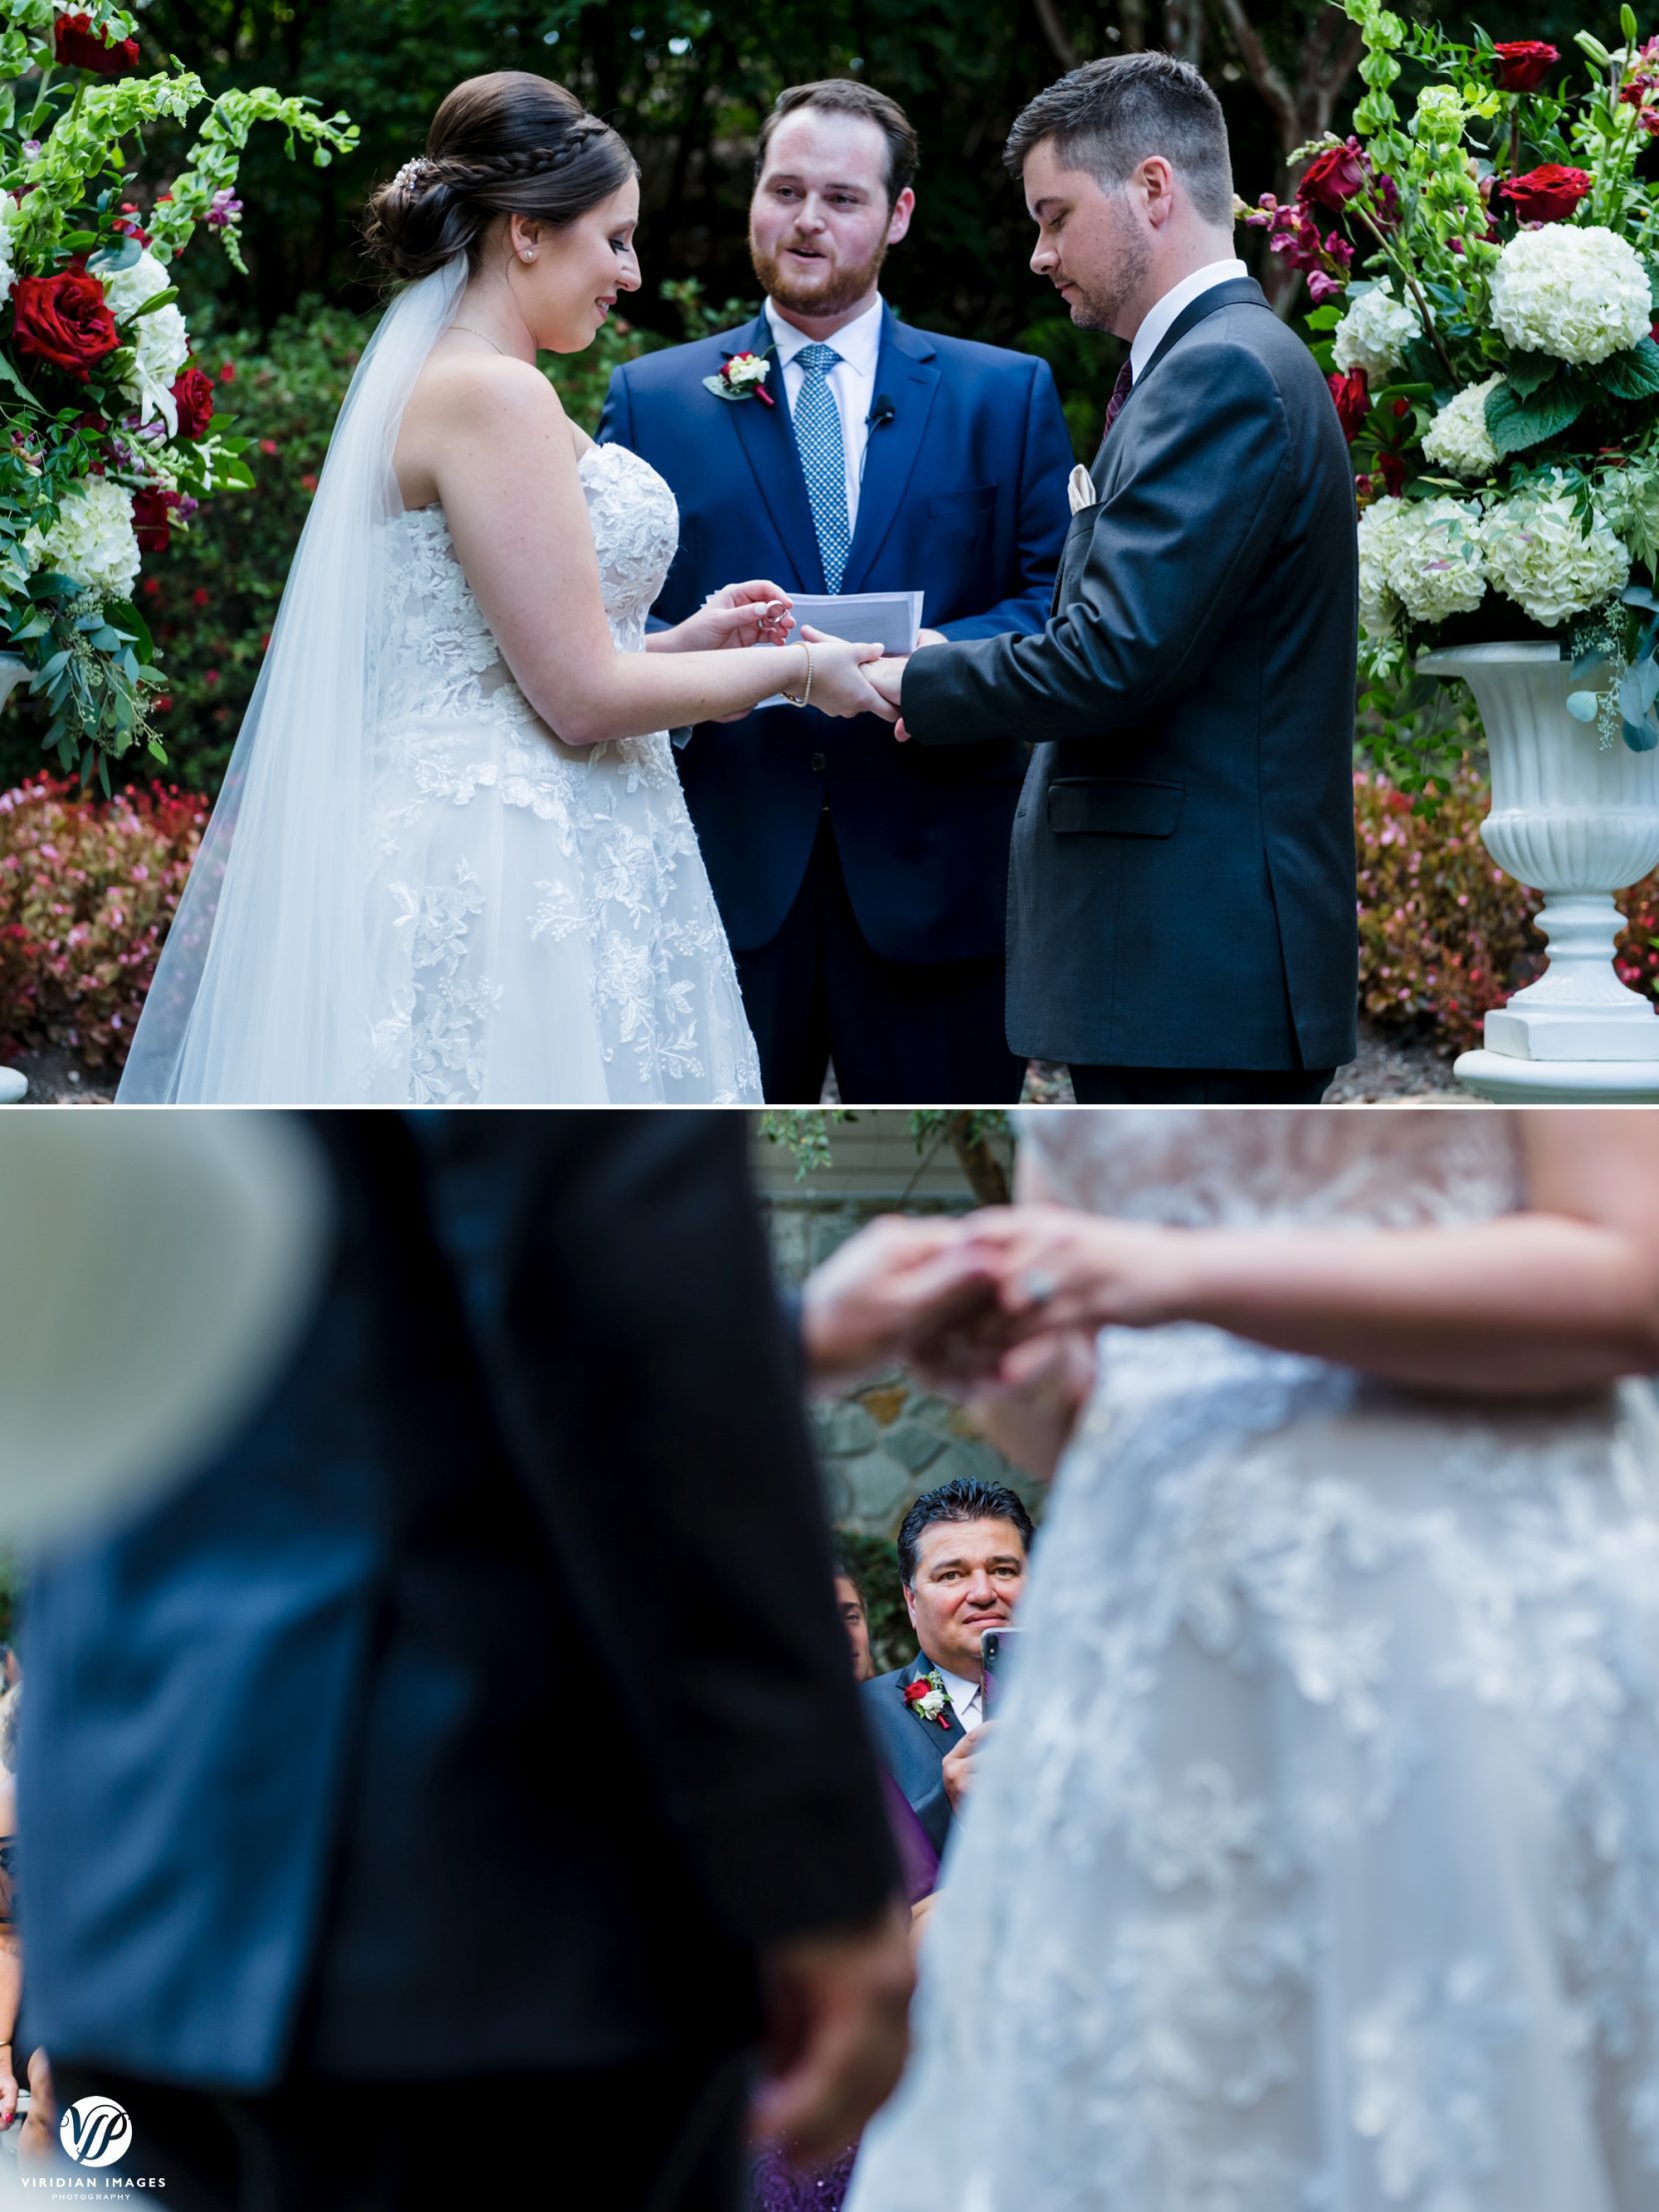 ring exchange. bride putting groom's ring